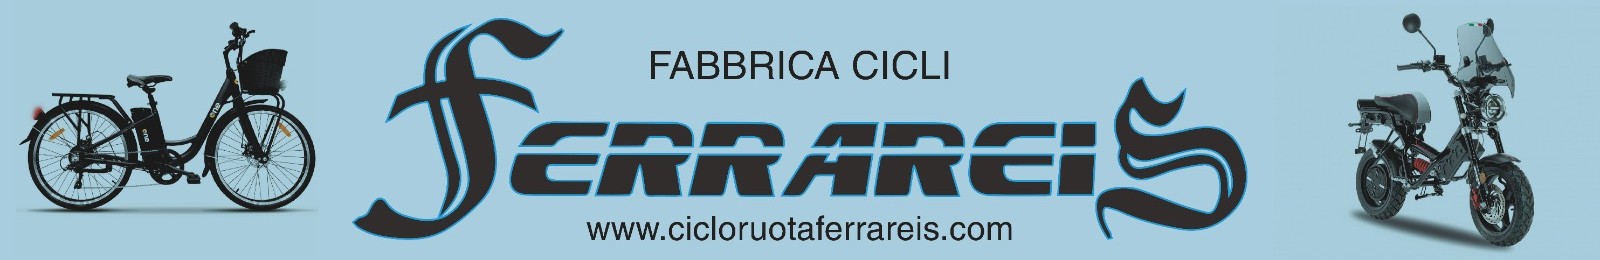 Cicli Ferrareis